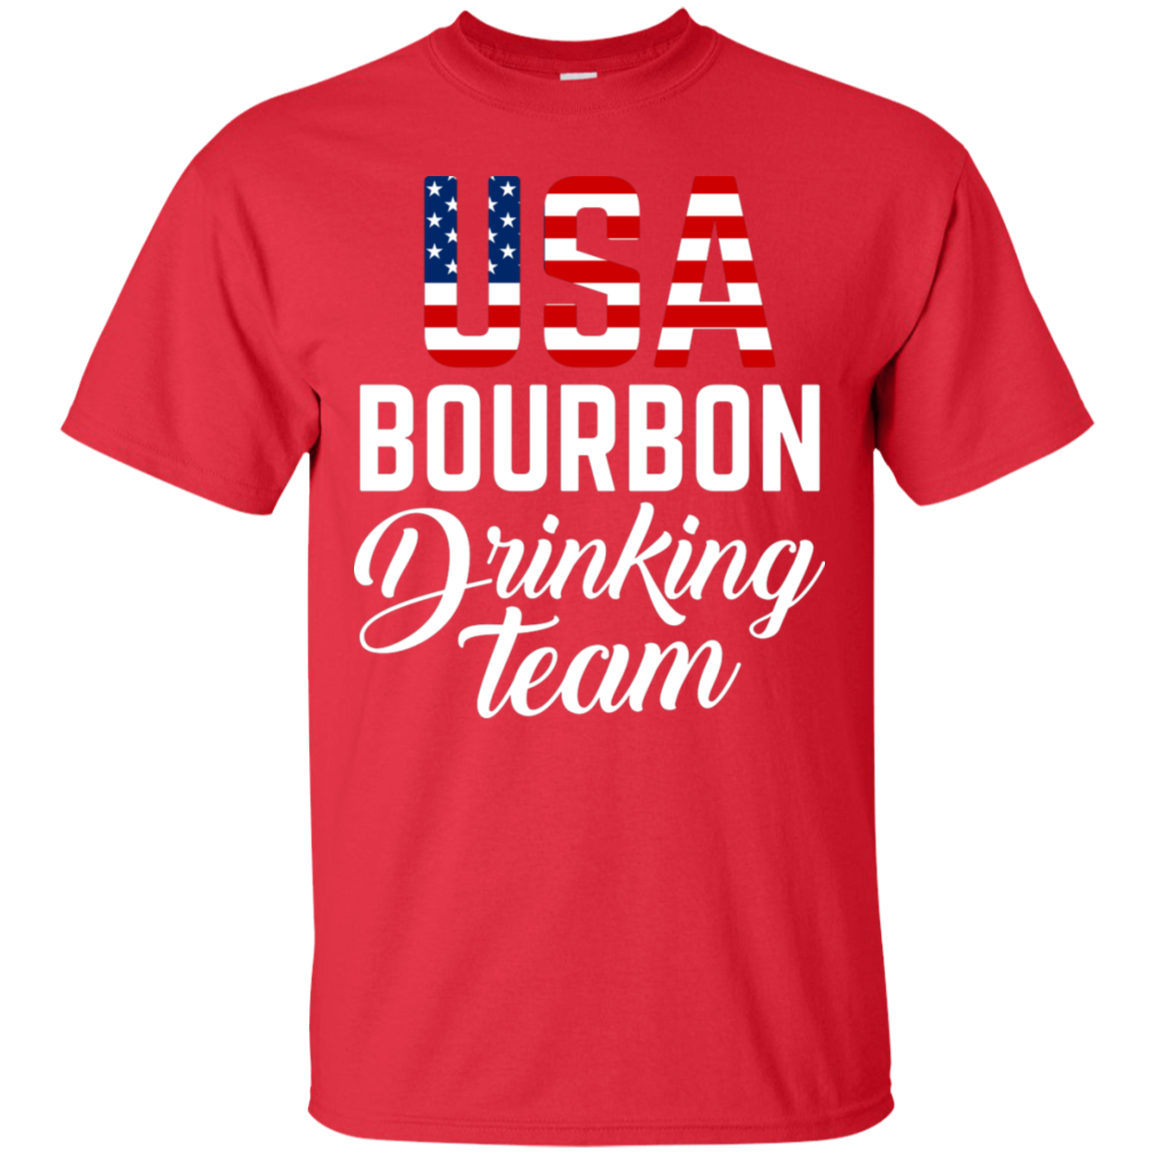 USA Bourbon Drinking Team T-Shirt Apparel - The Beer Lodge